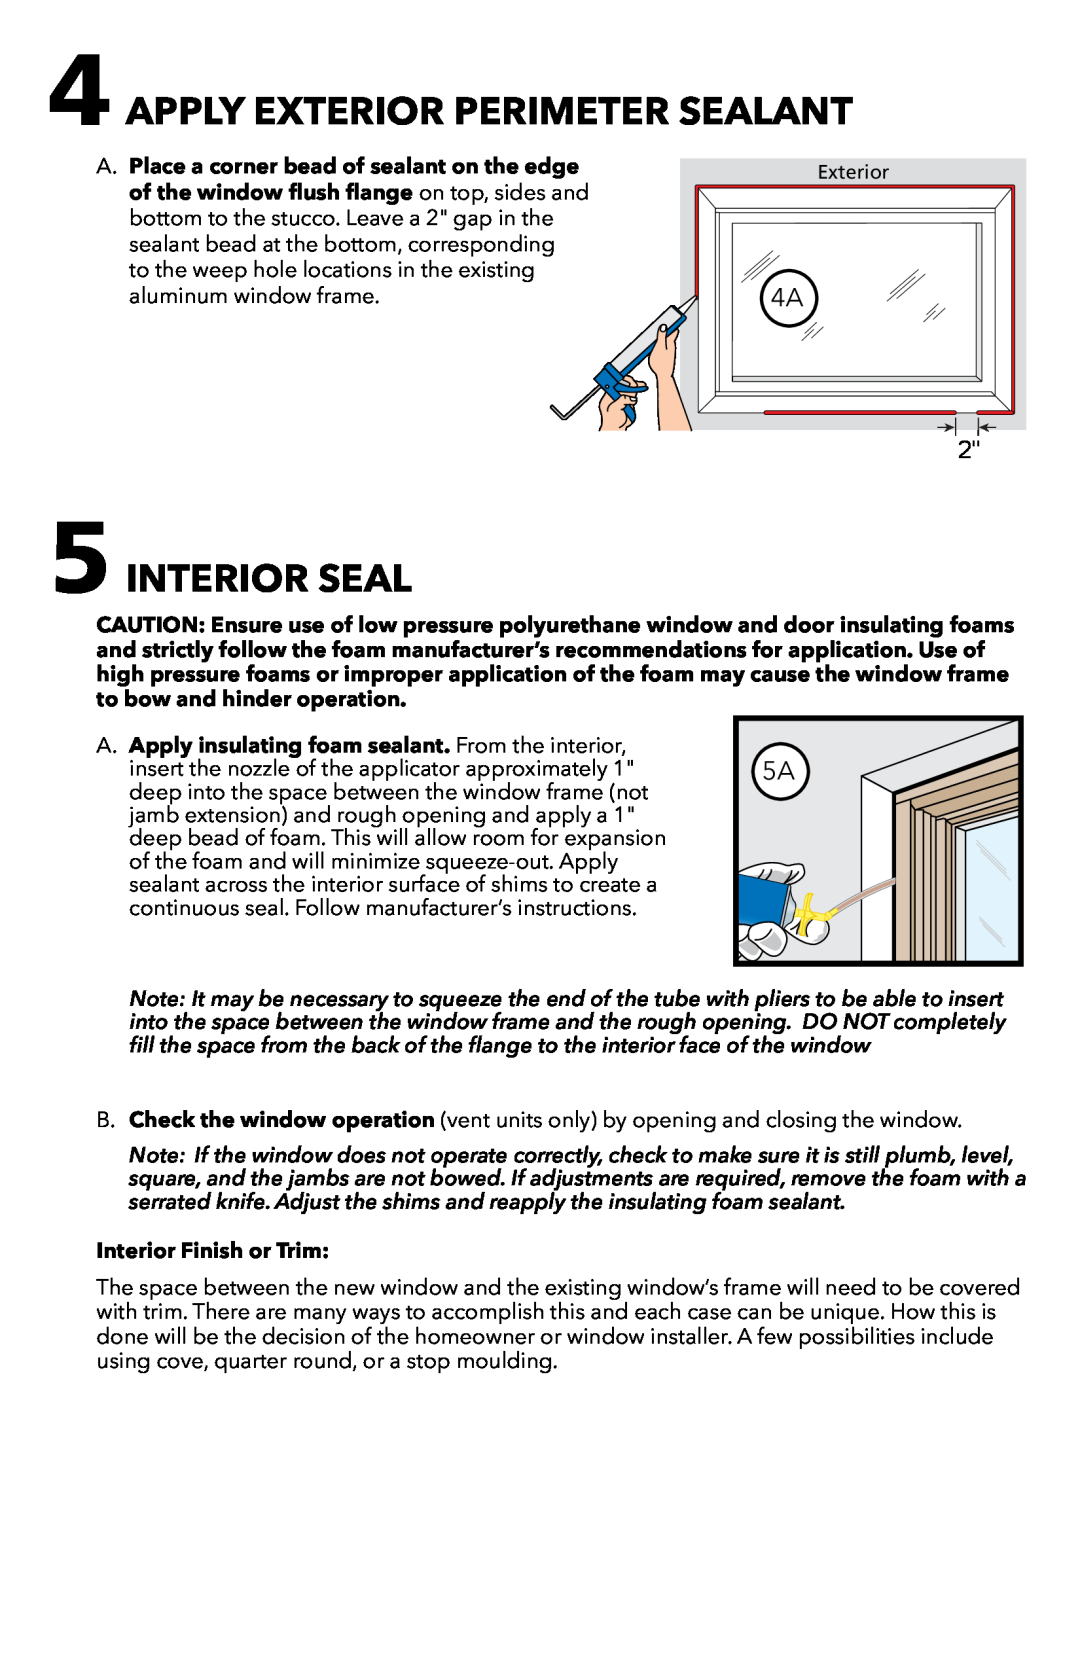 Pella 81CP0101 installation instructions Apply exterior perimeter sealant, Interior seal 